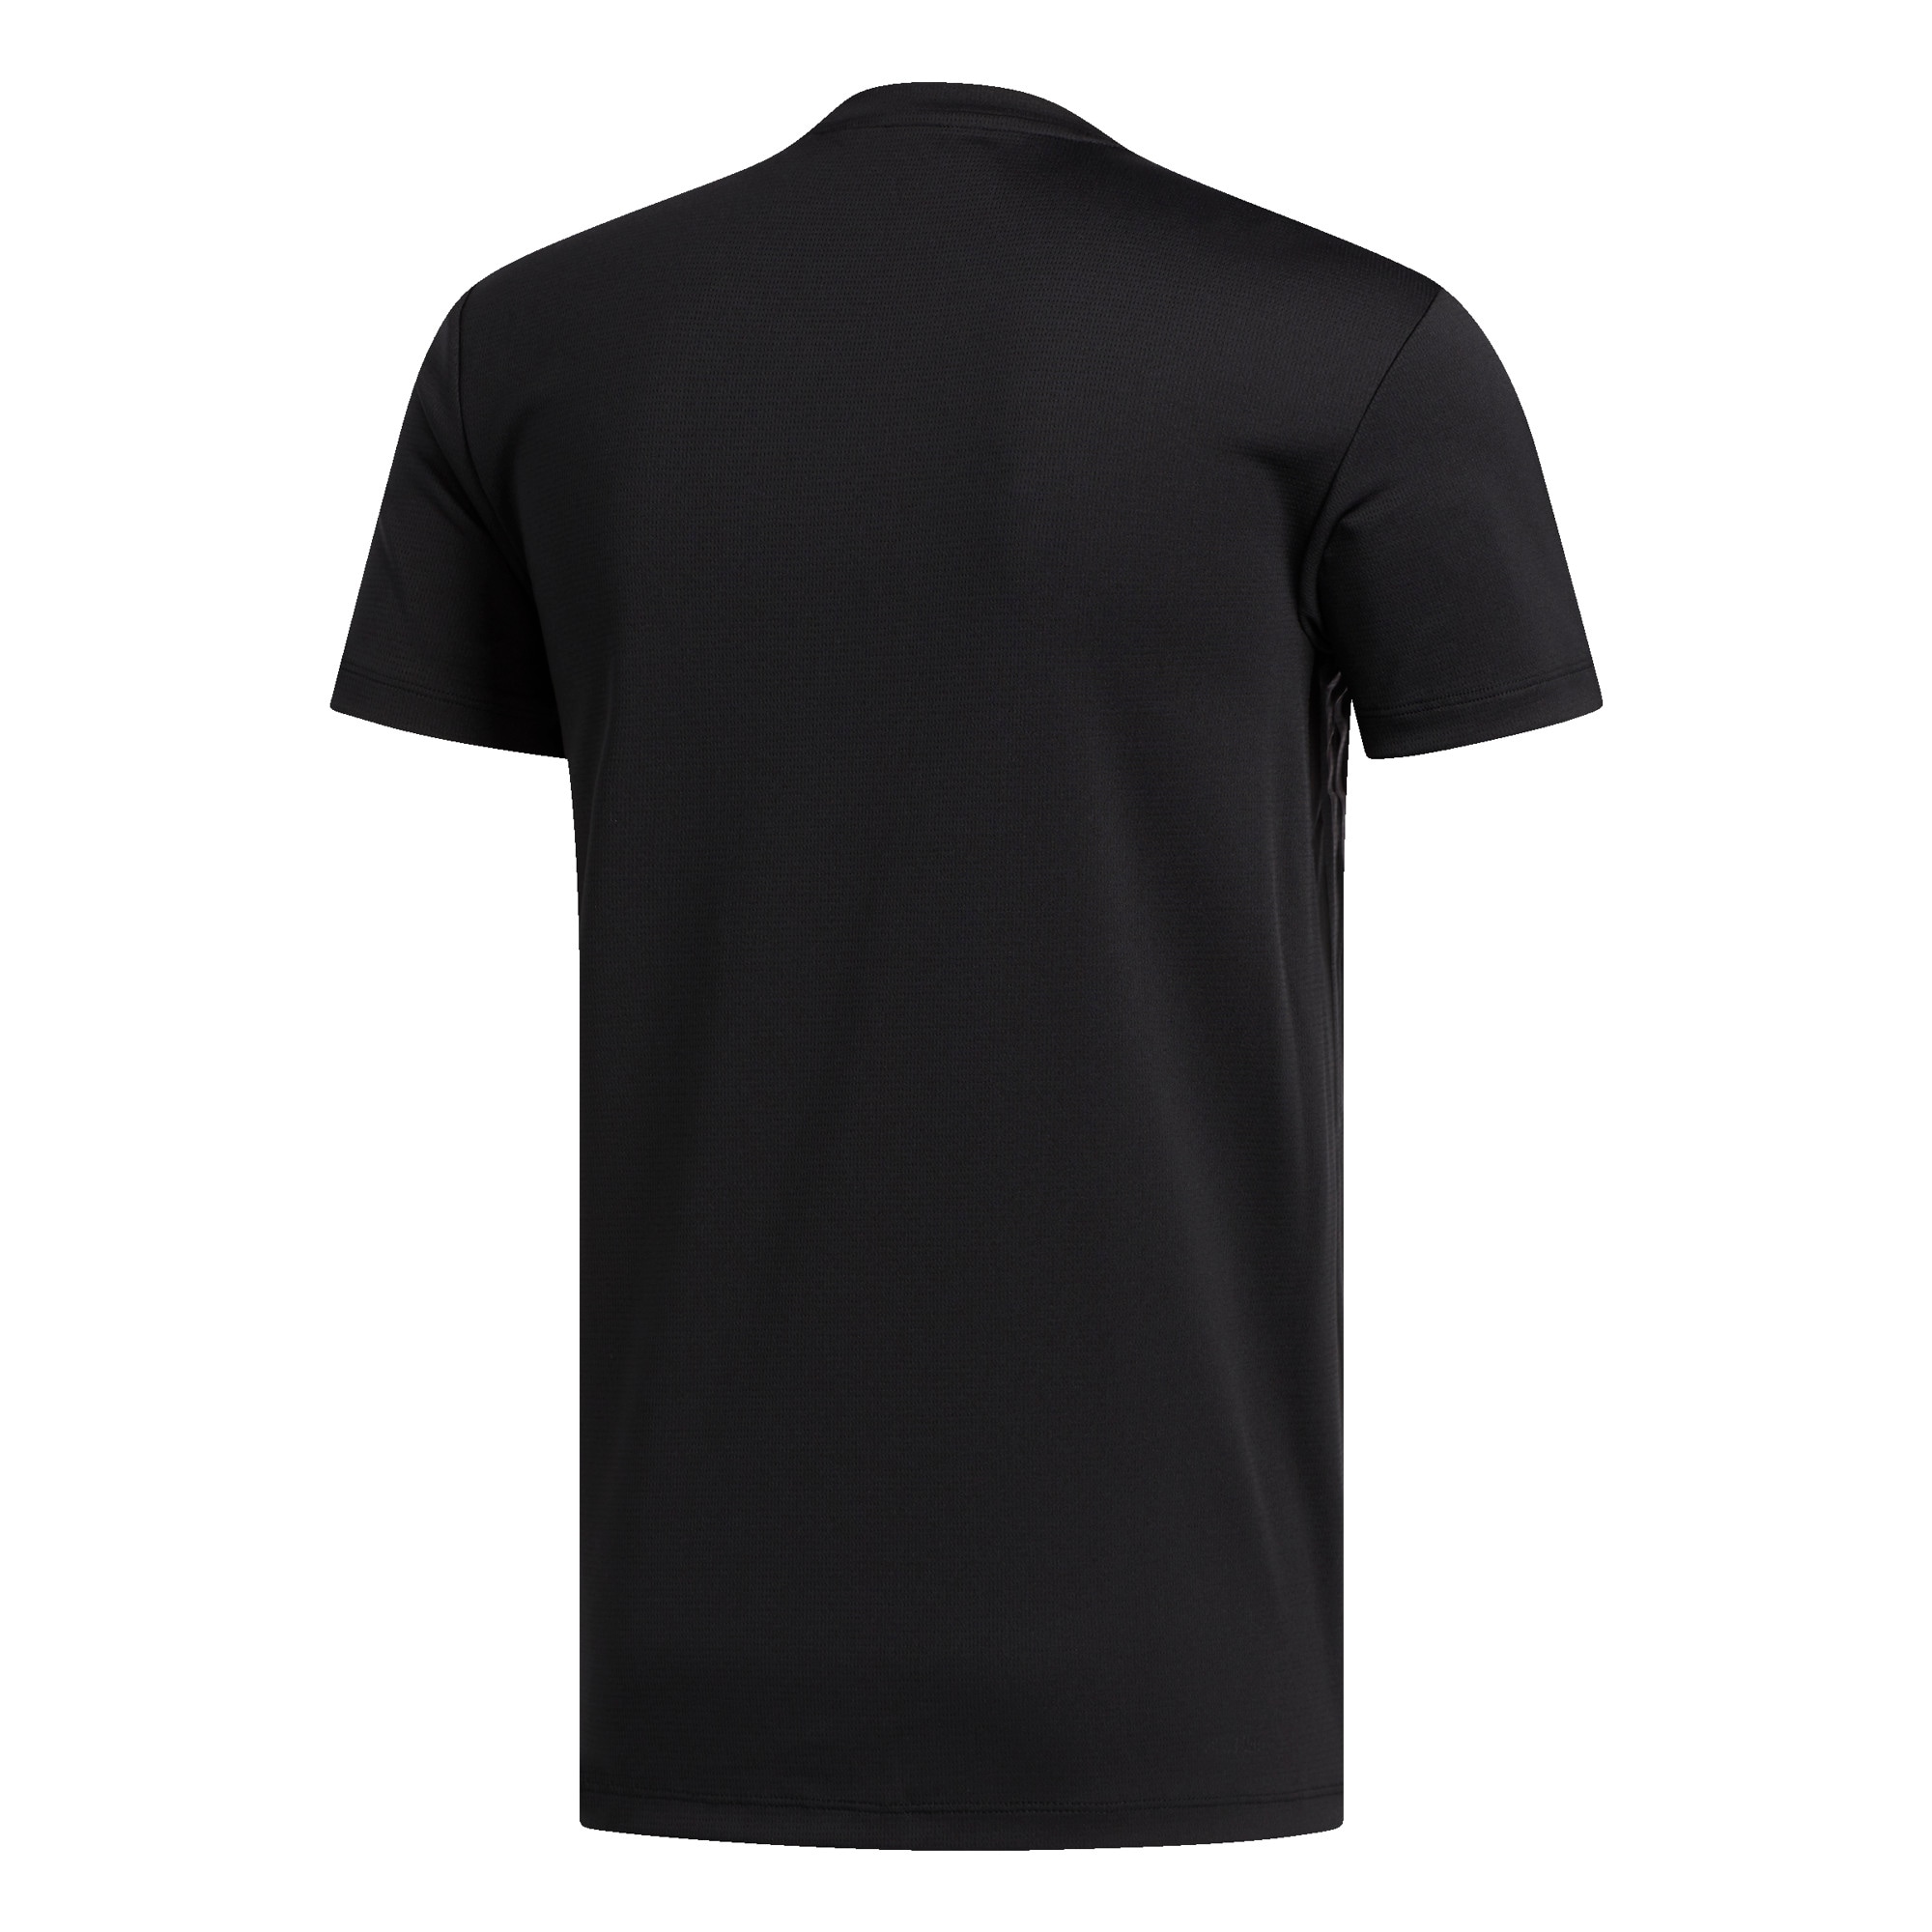 ADIDAS PERFORMANCE Functional shirt 'AEO 3s'  black / grey